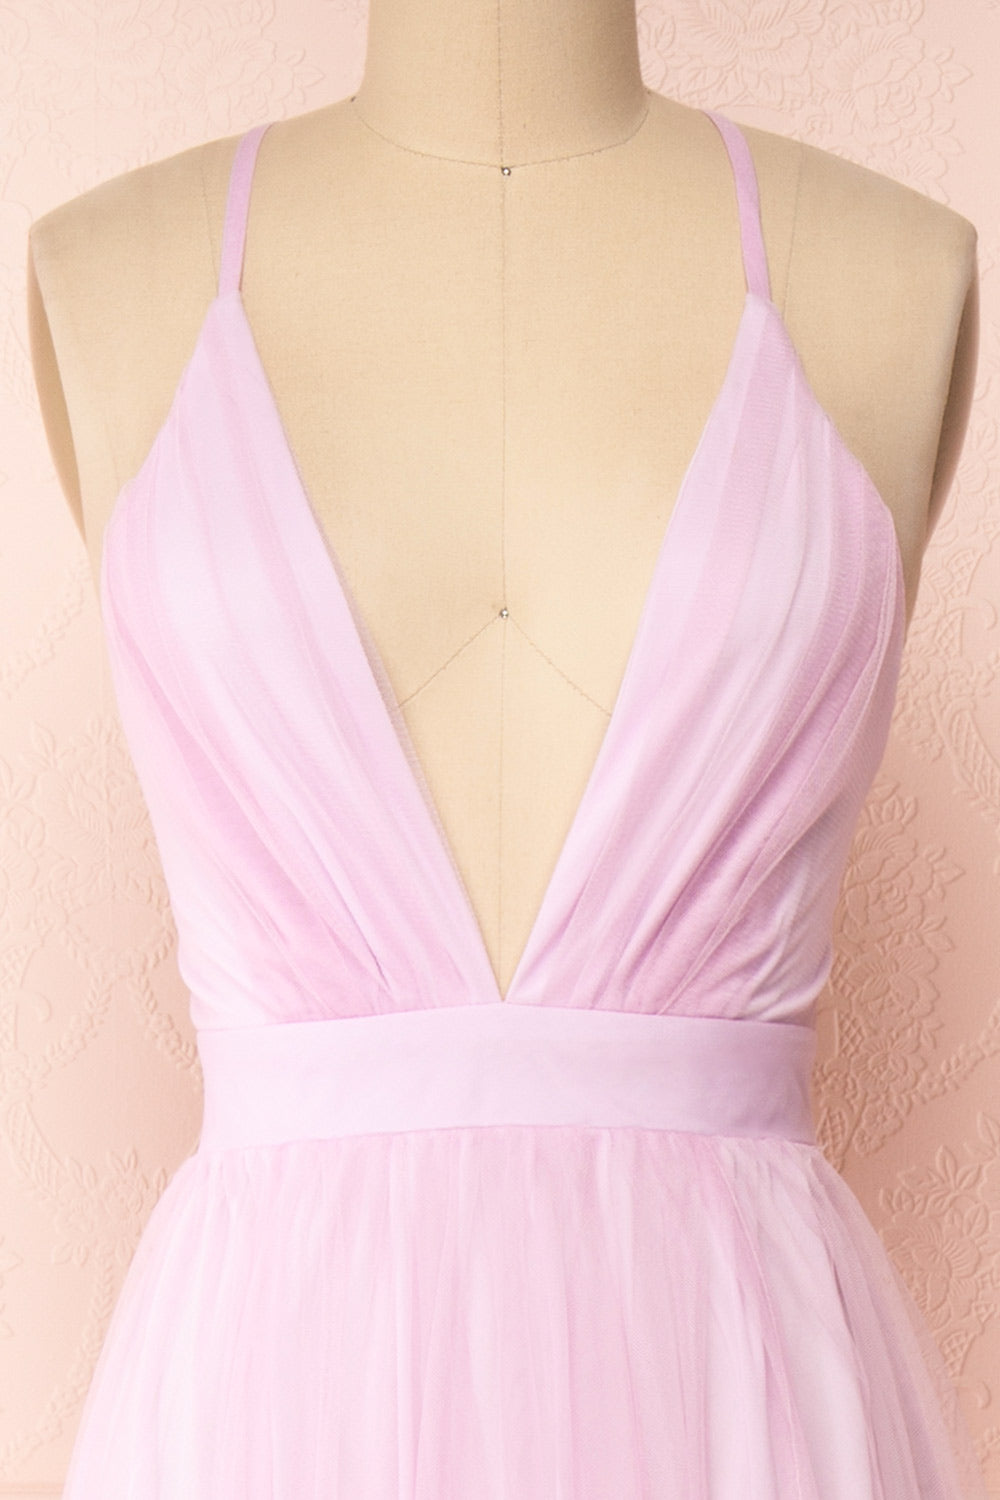 Aliki Lavender Pink Mesh Maxi Dress | Boutique 1861 front close-up